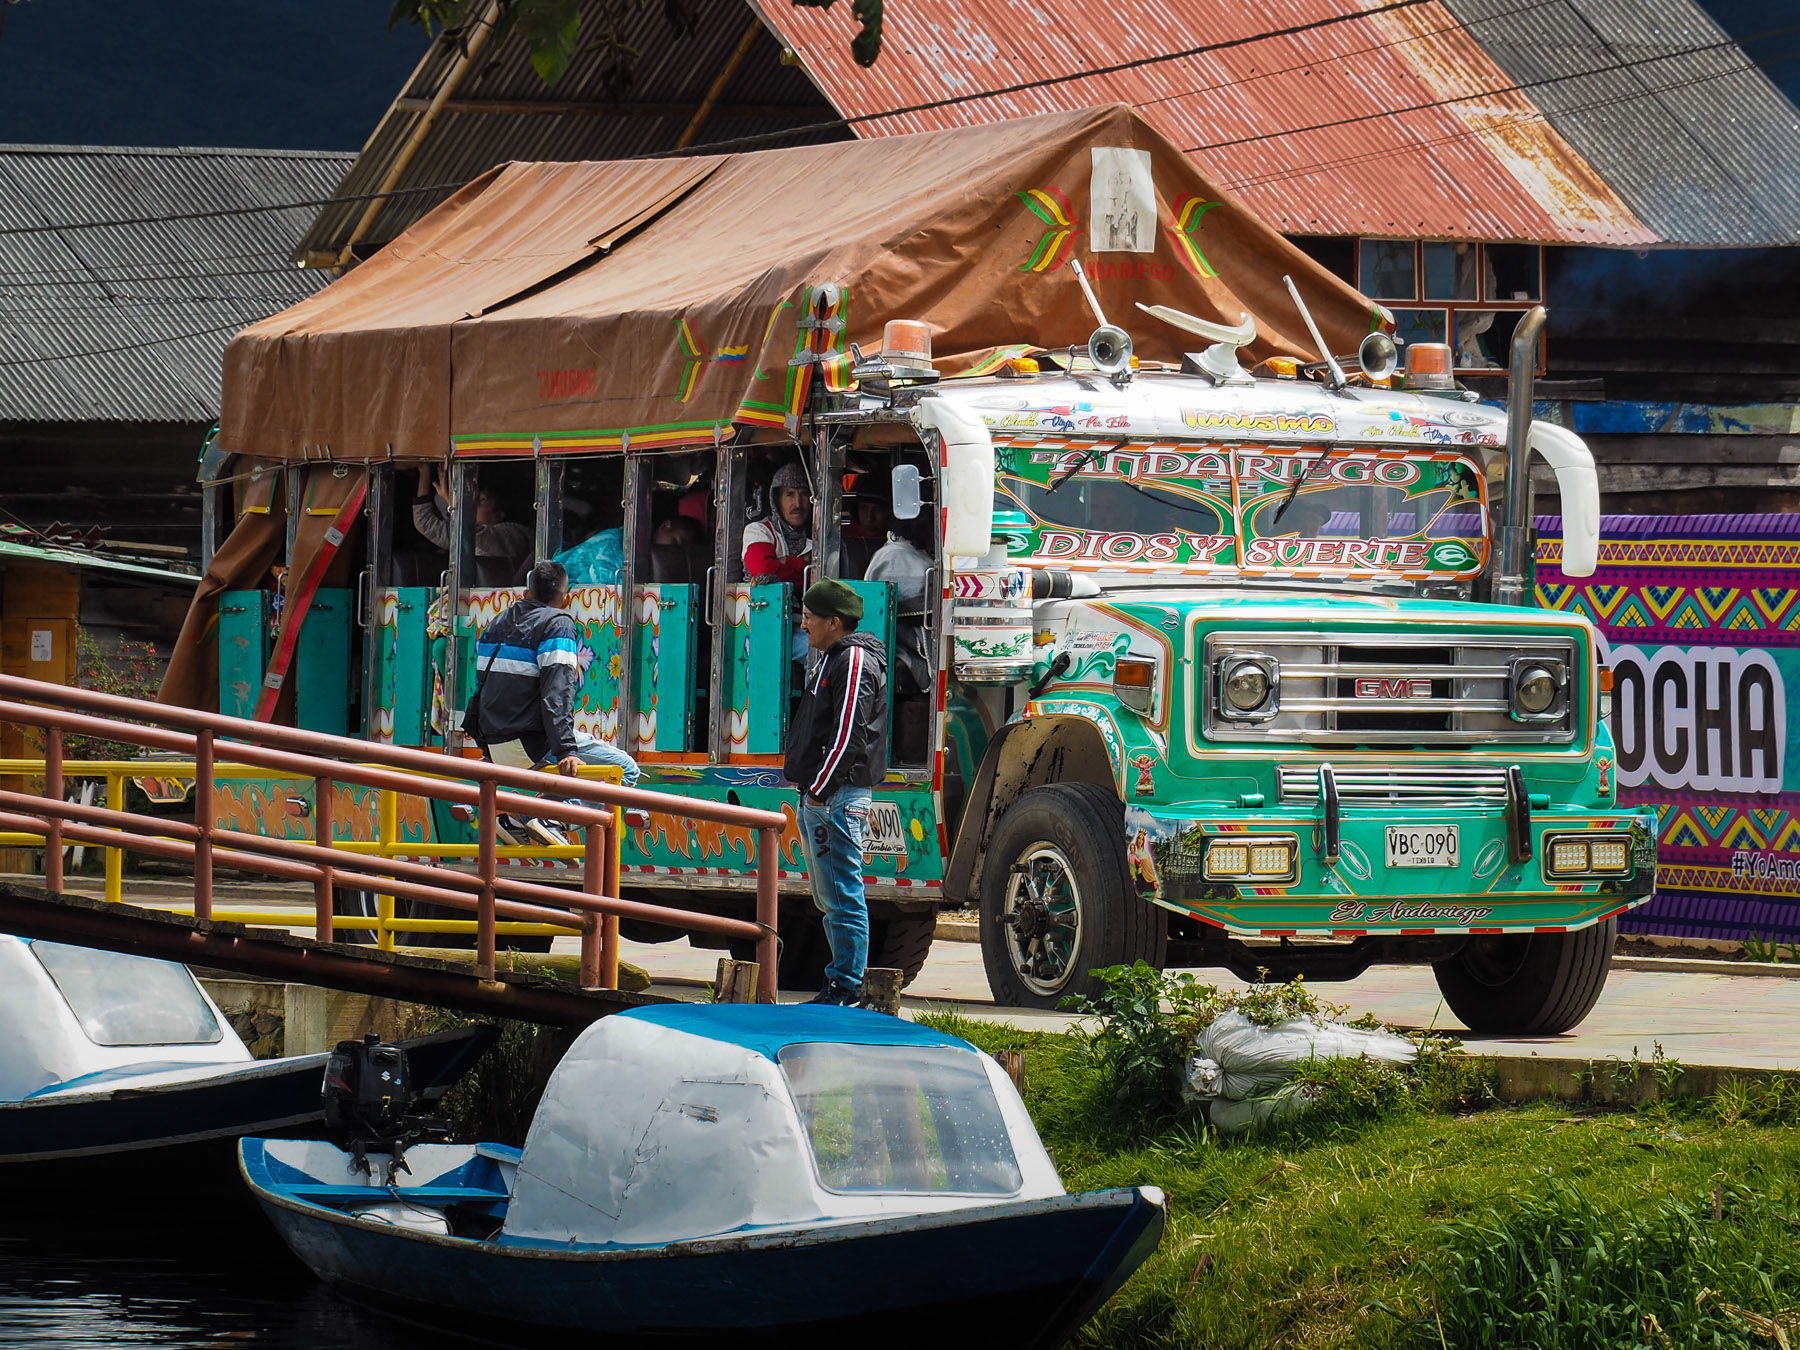 Chivas heißen diese bunten Busse in Kolumbien